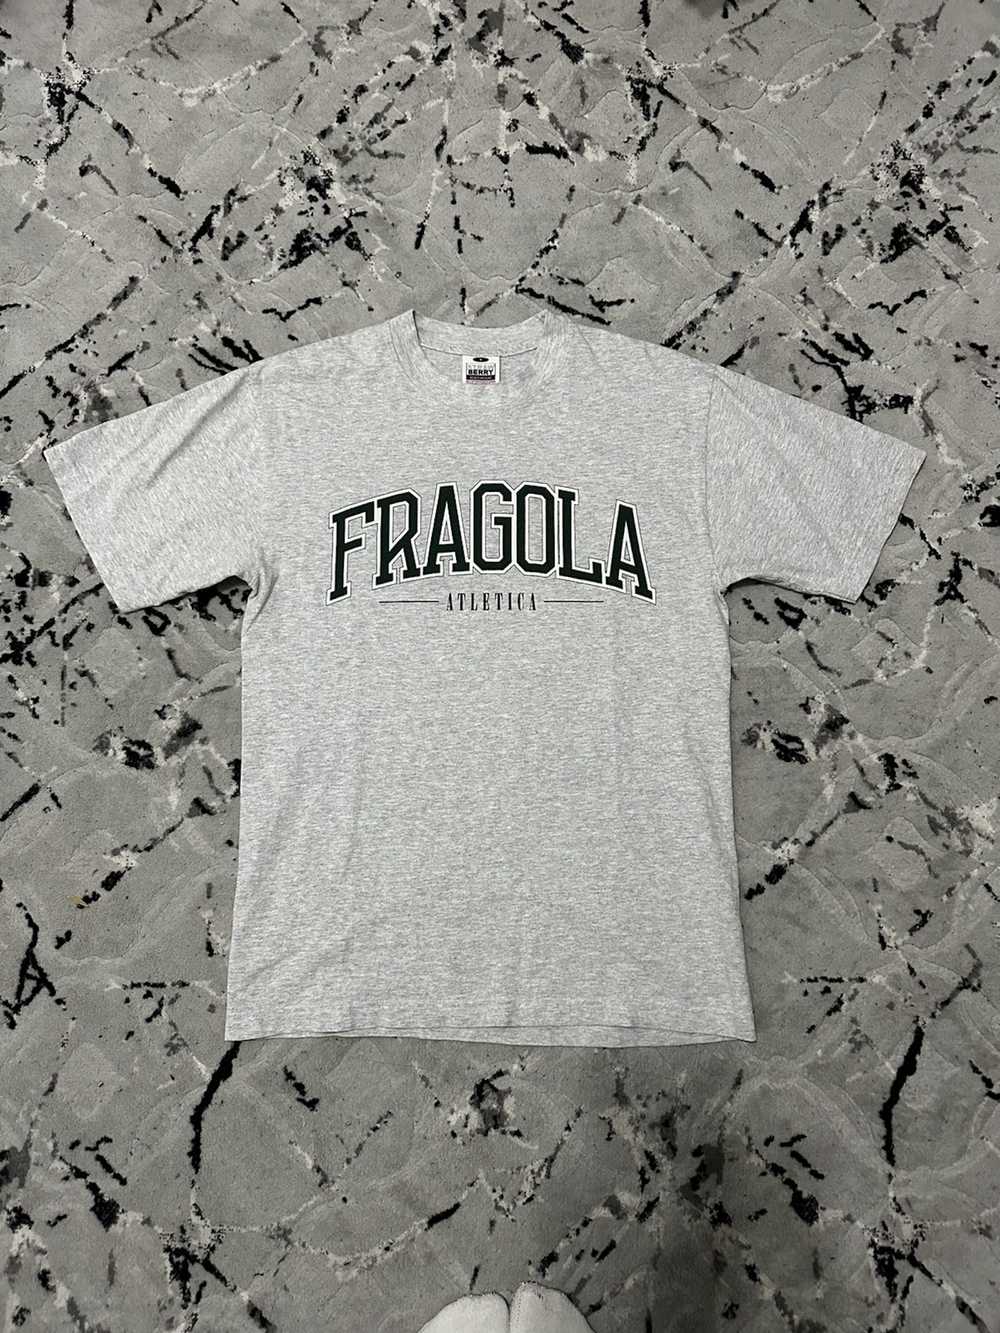 Kai × Strawberry Strawberry “Fragola” T shirt - image 1